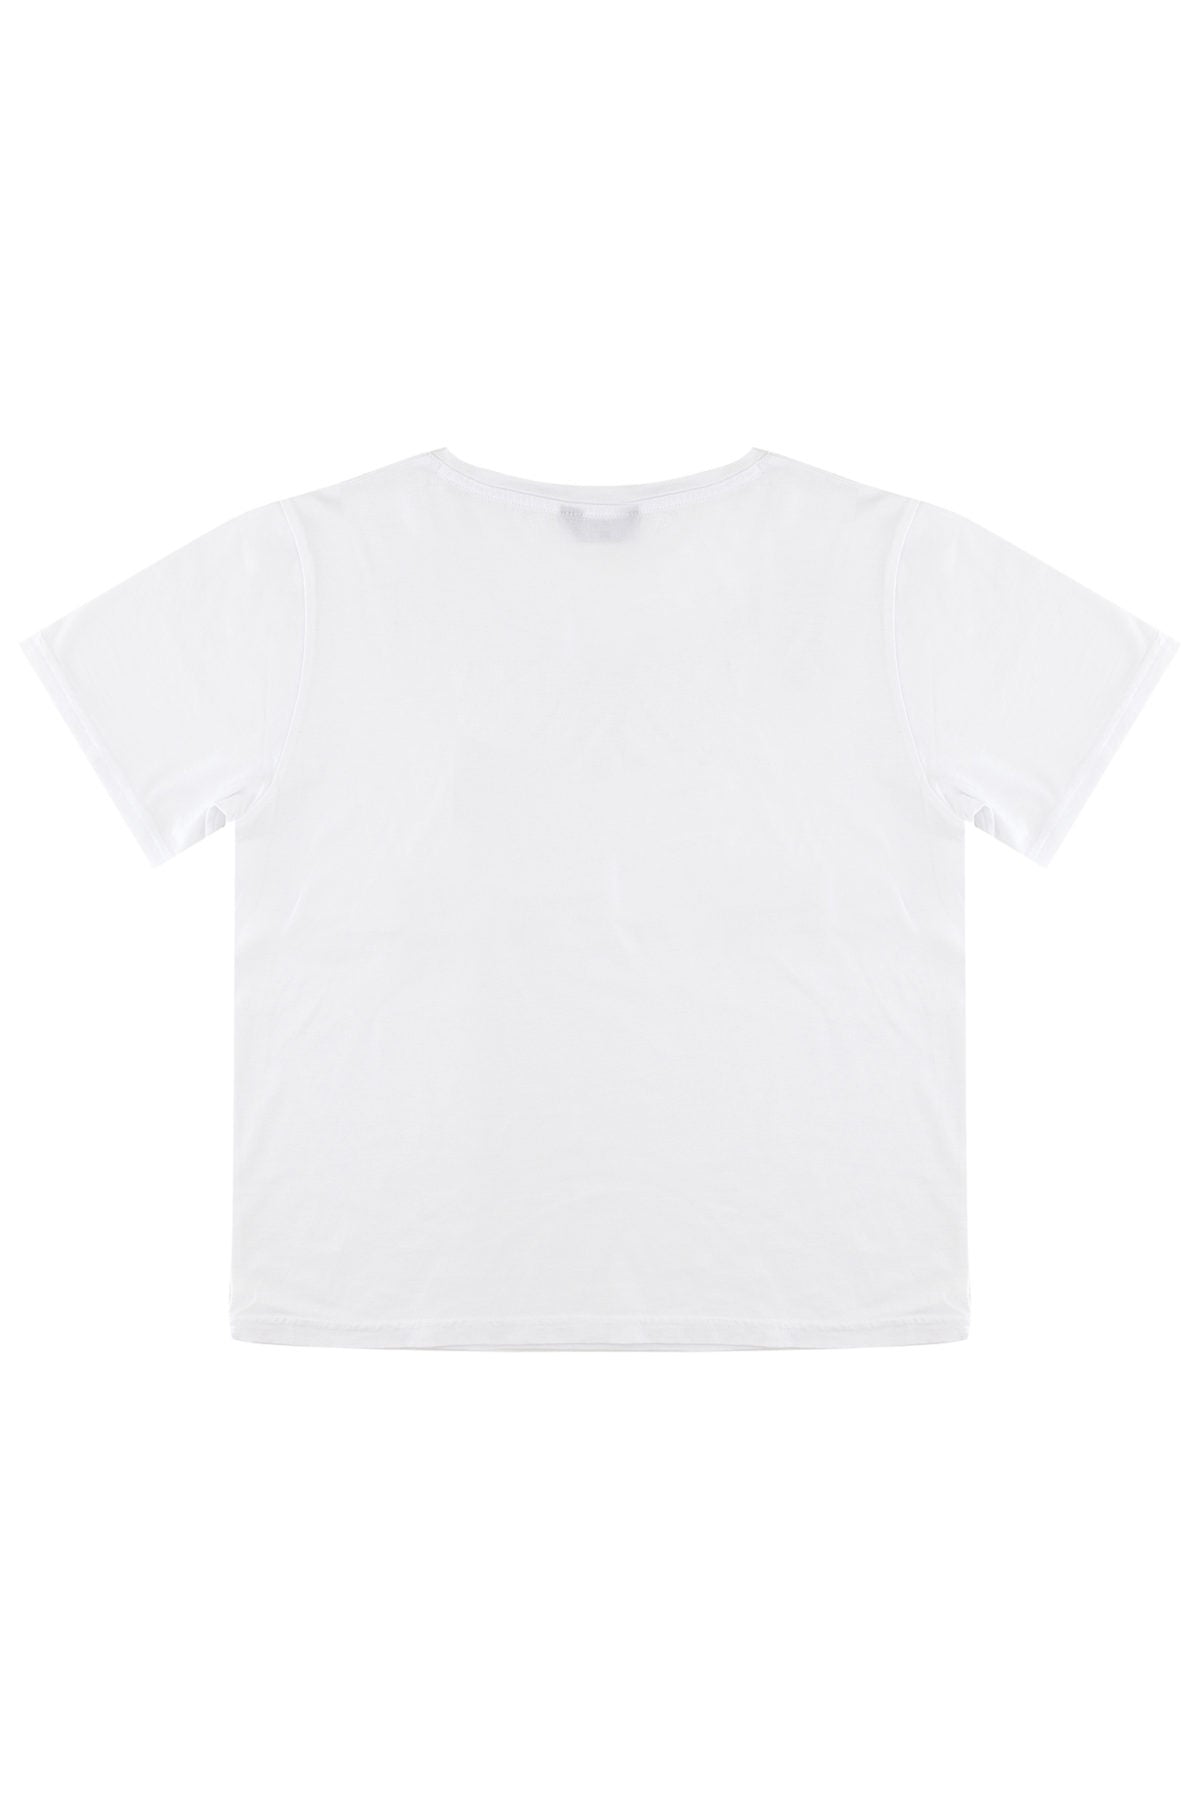 Cotton T-Shirt - New York